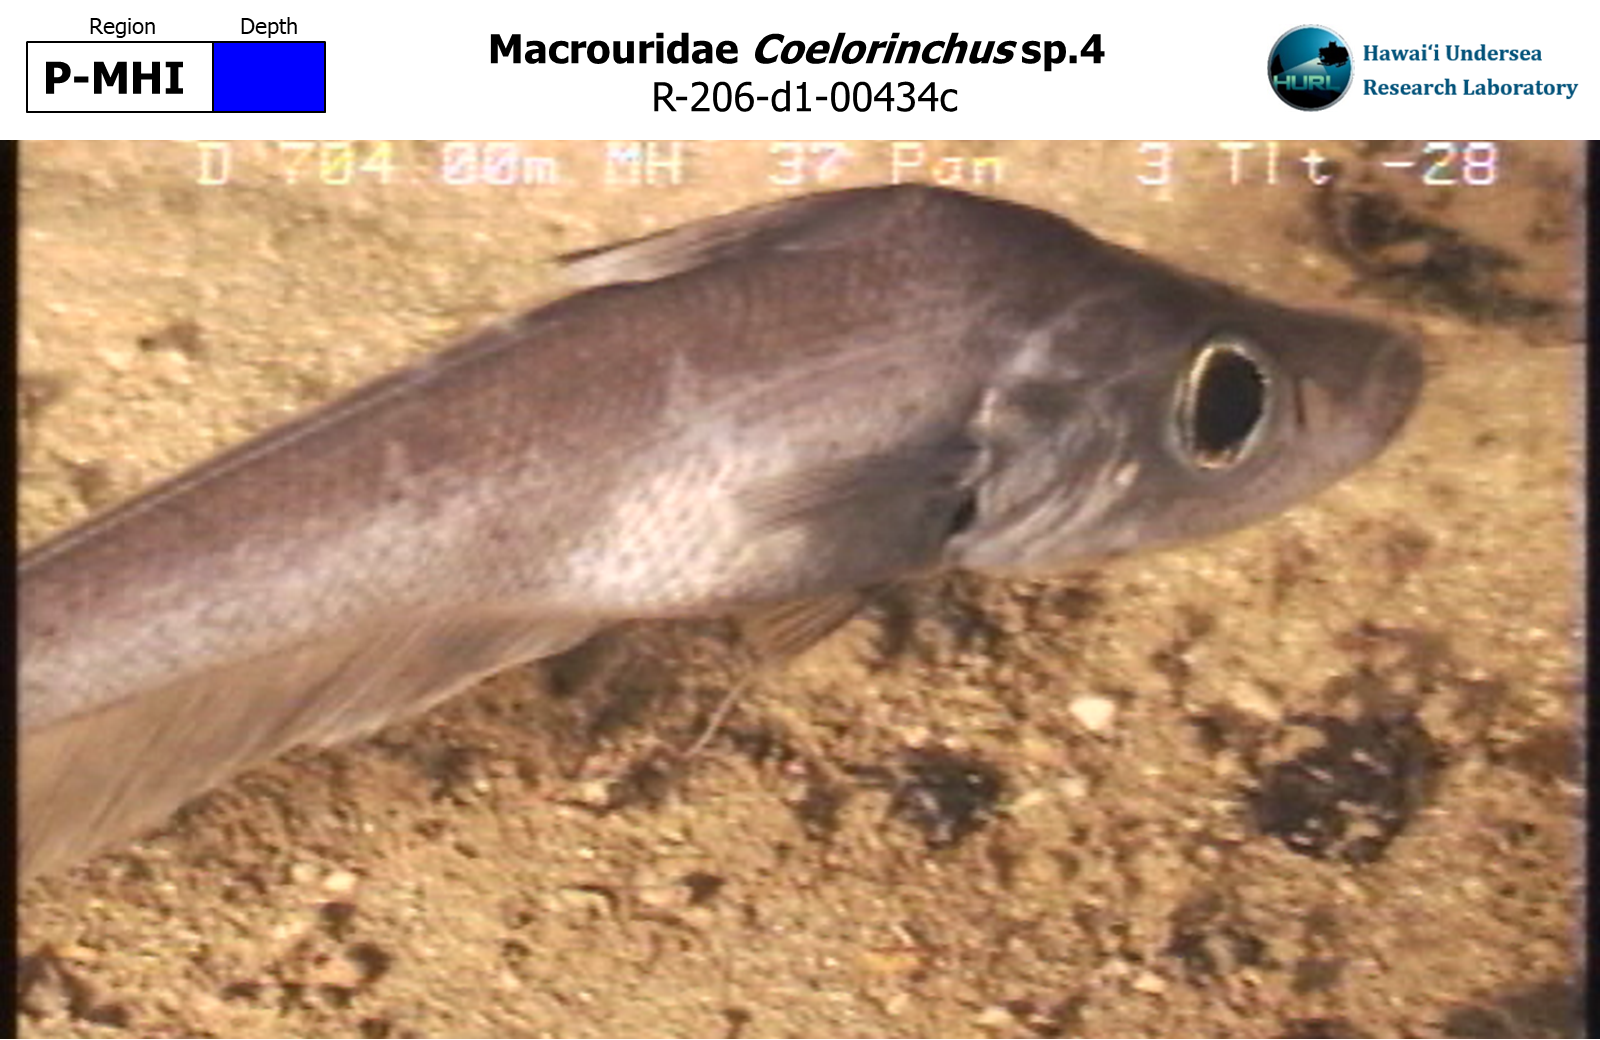 Hawaii Undersea Research Laboratory: Animal Image